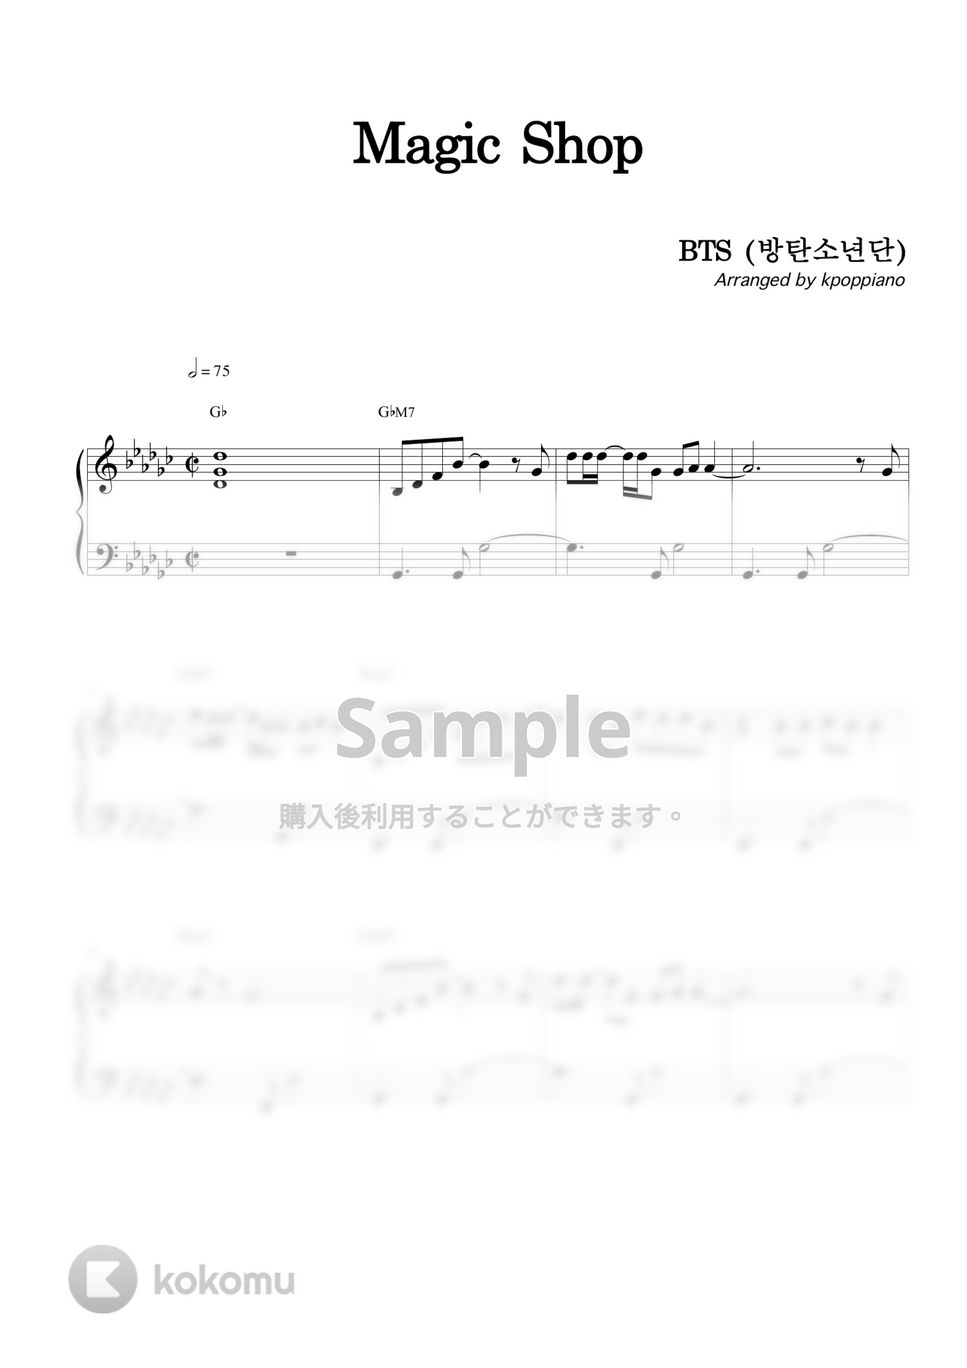 防弾少年団 (BTS) - Magic Shop by KPOP PIANO